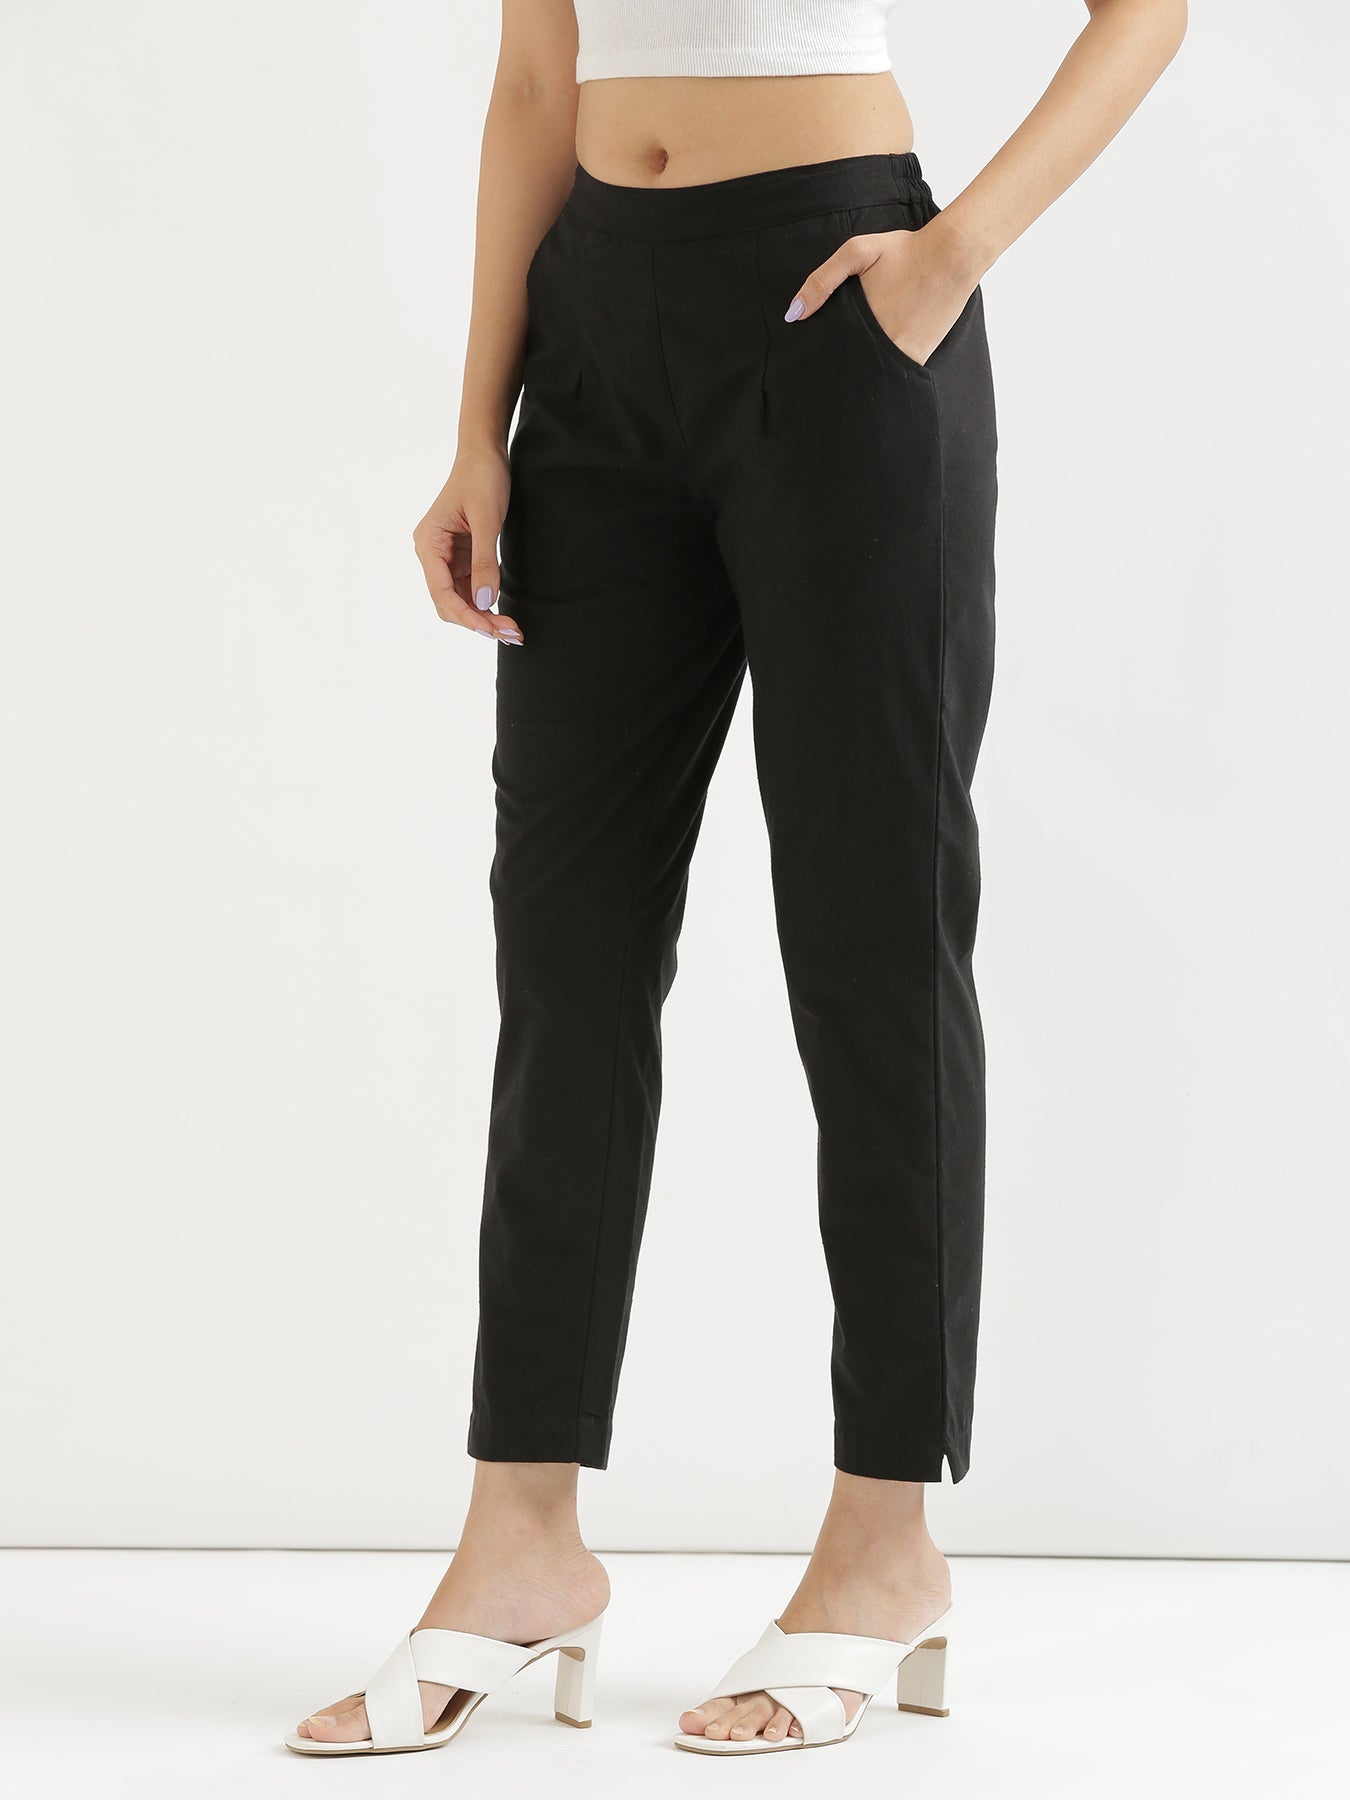 LaDonna Rush Effect Black Trousers High waisted | Black trousers, High  waisted trousers, Popular outfits